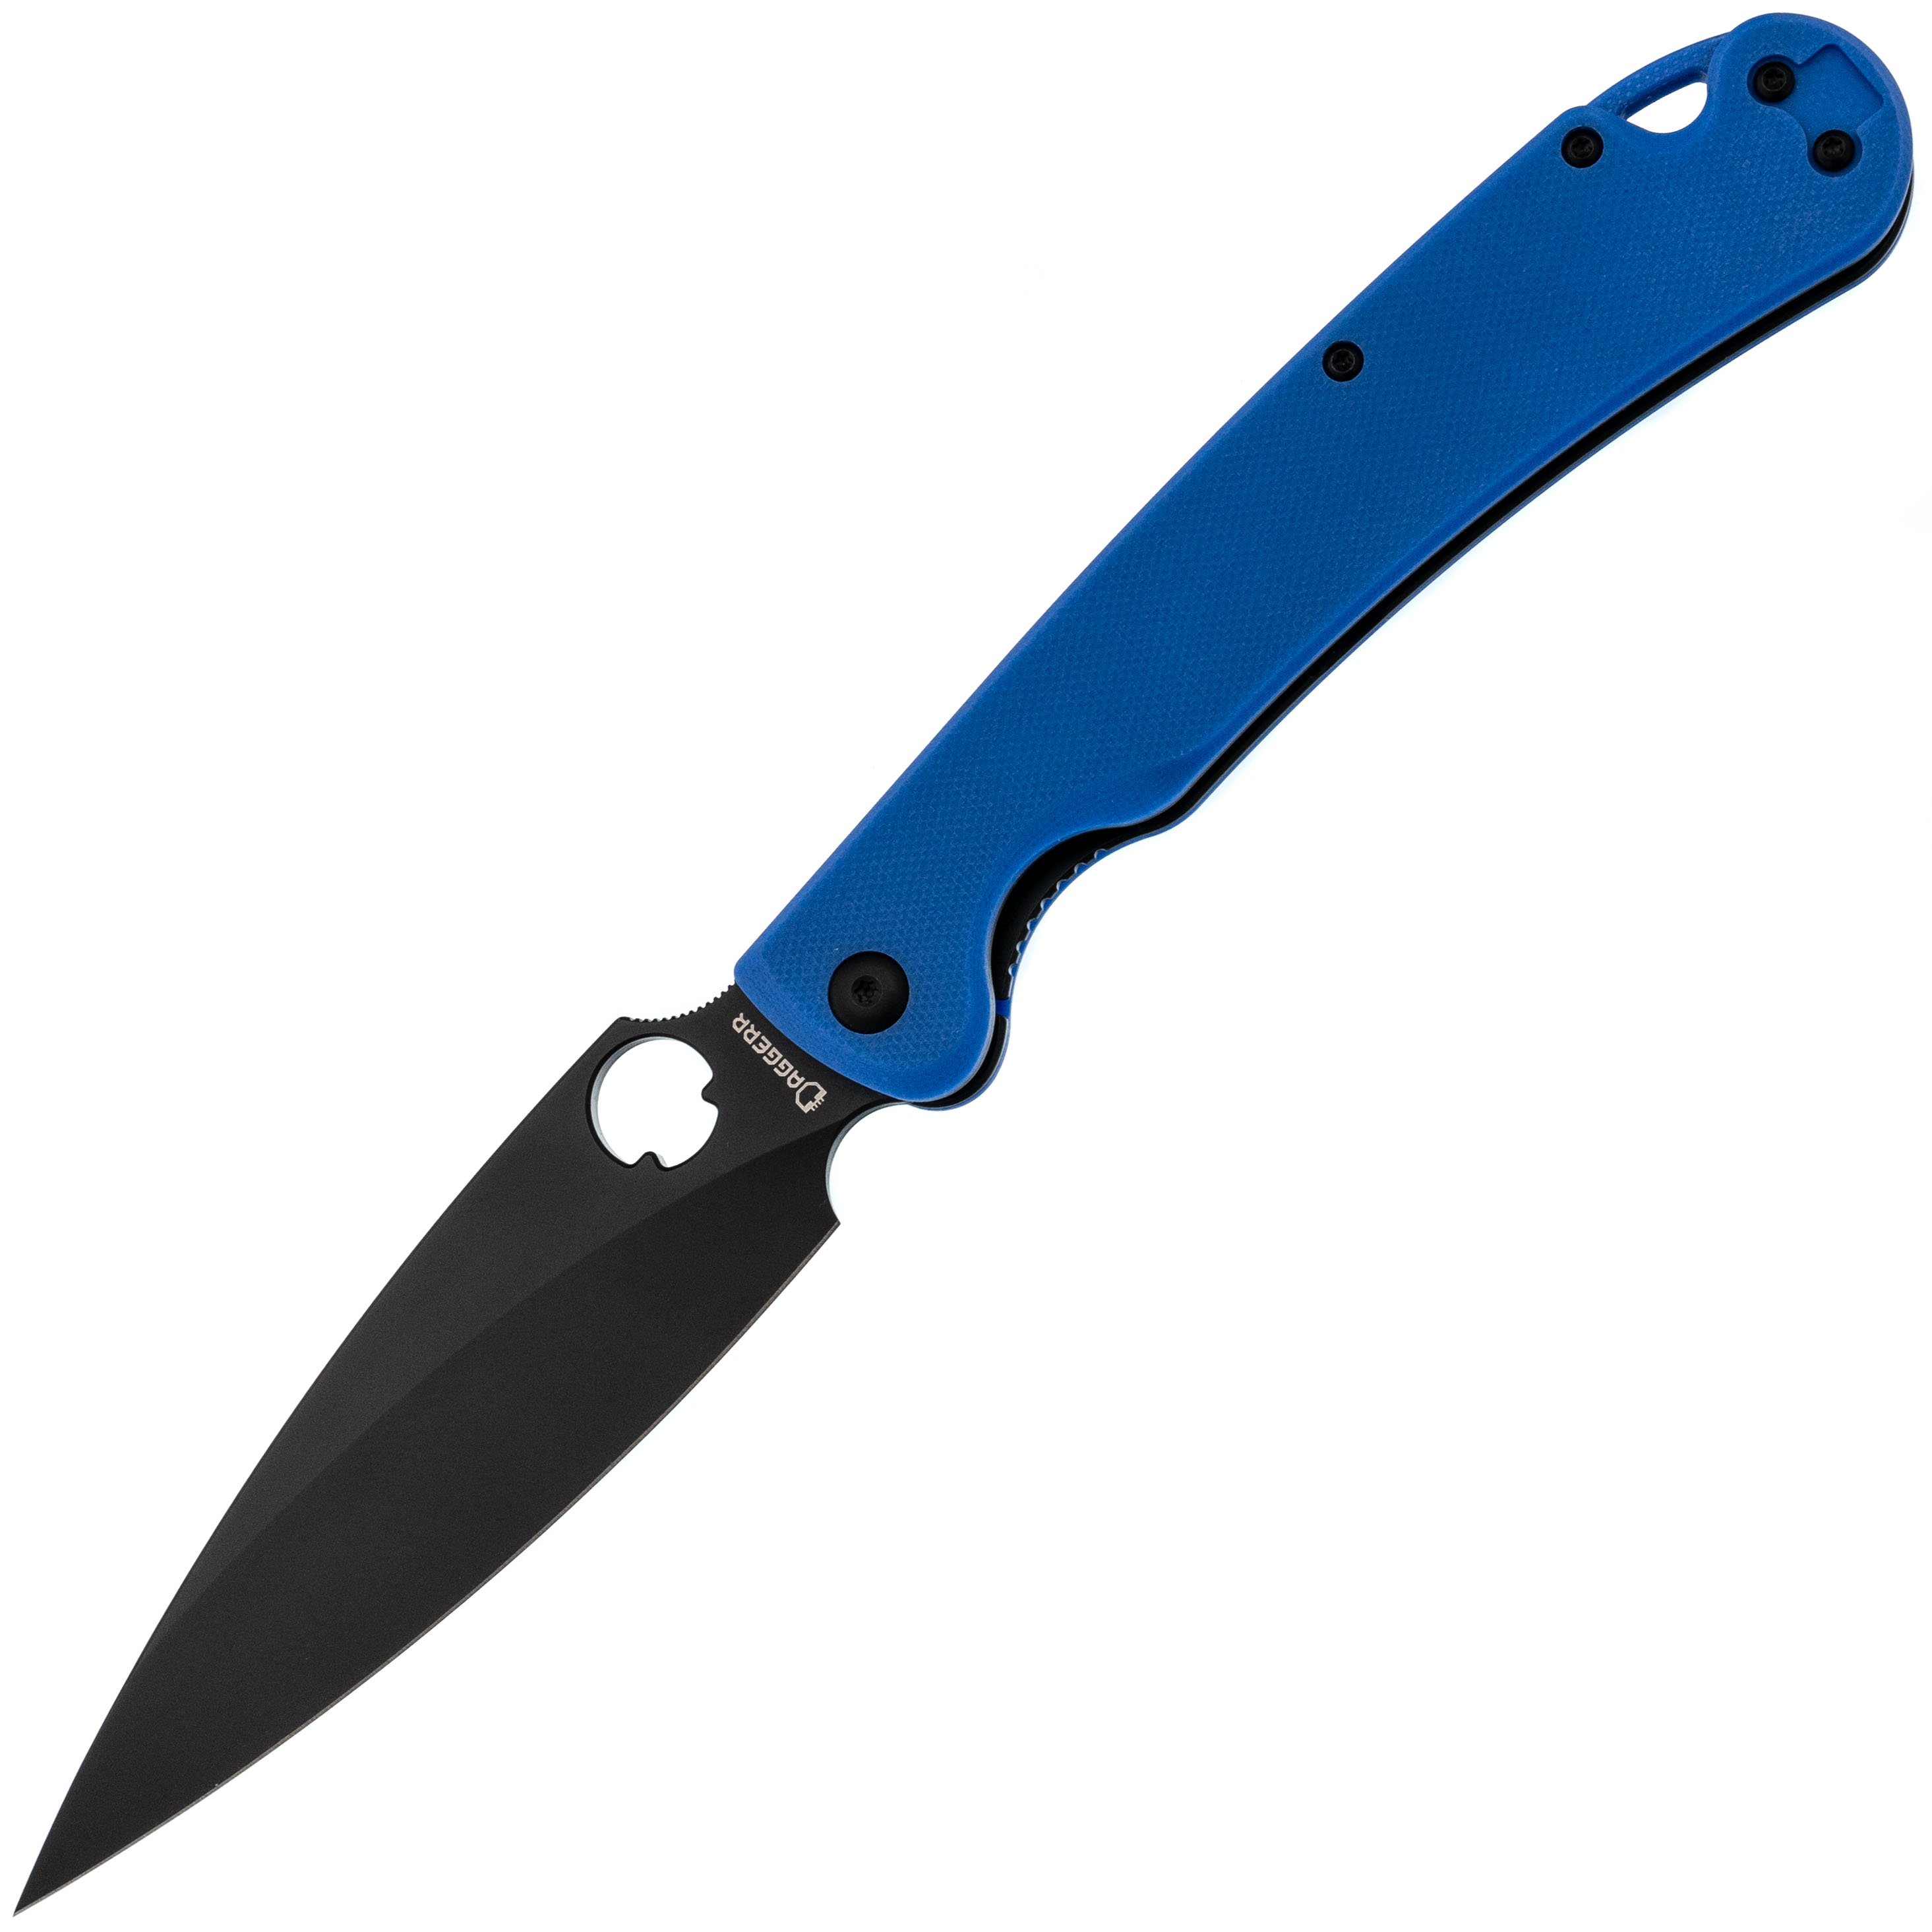   Daggerr Sting XL Blue BW DLC,  D2,  G10